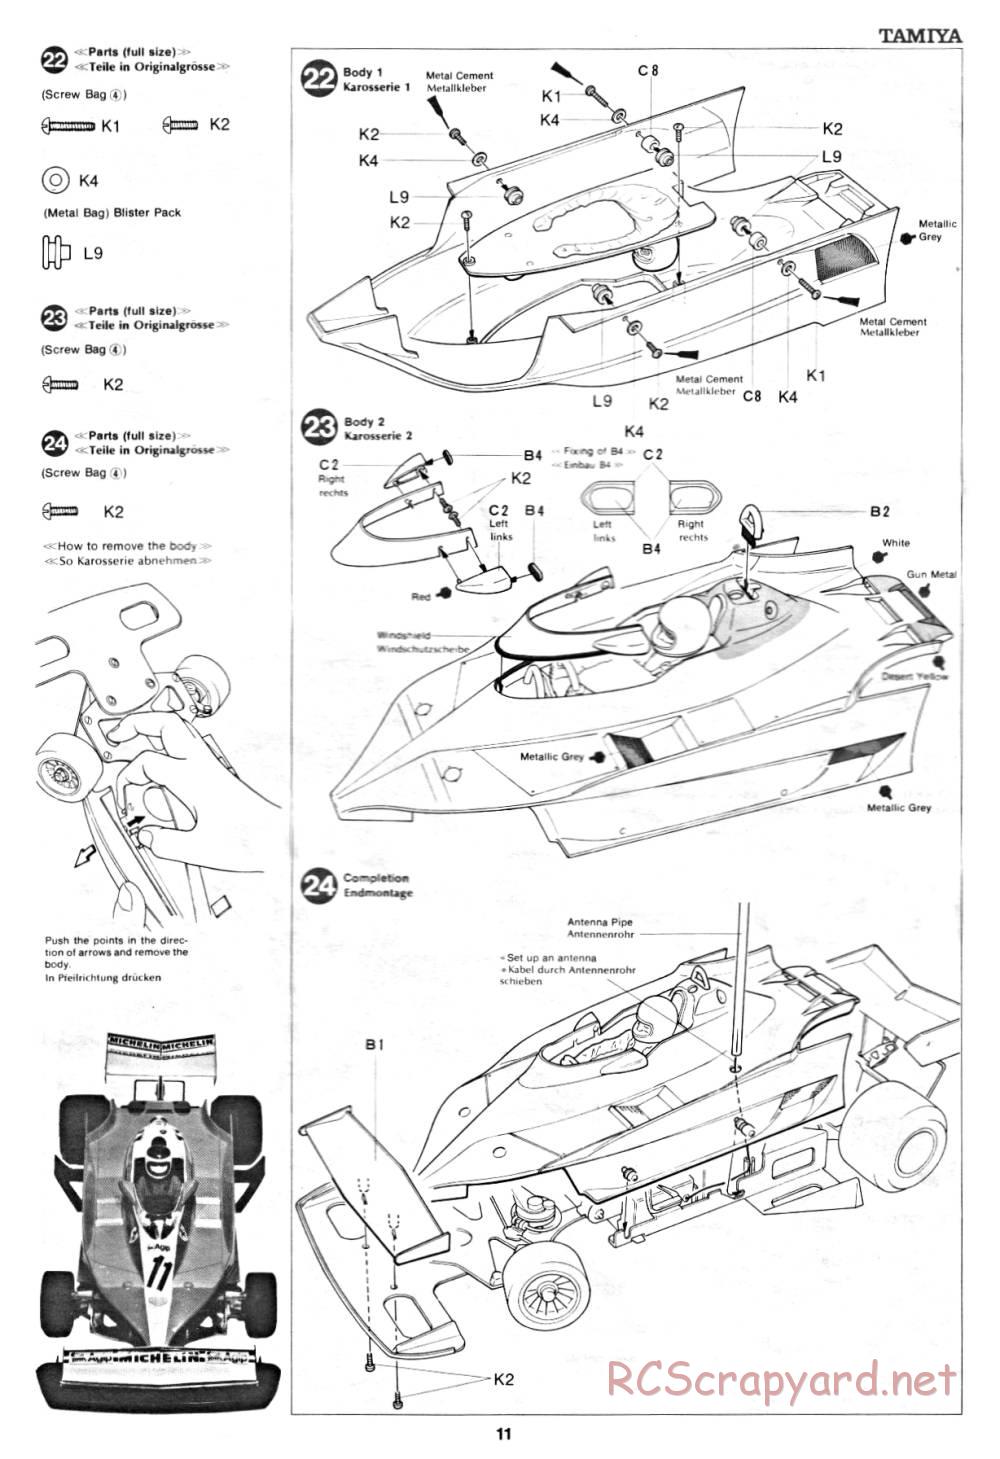 Tamiya - Ferrari 312T3 - 58011 - Manual - Page 11